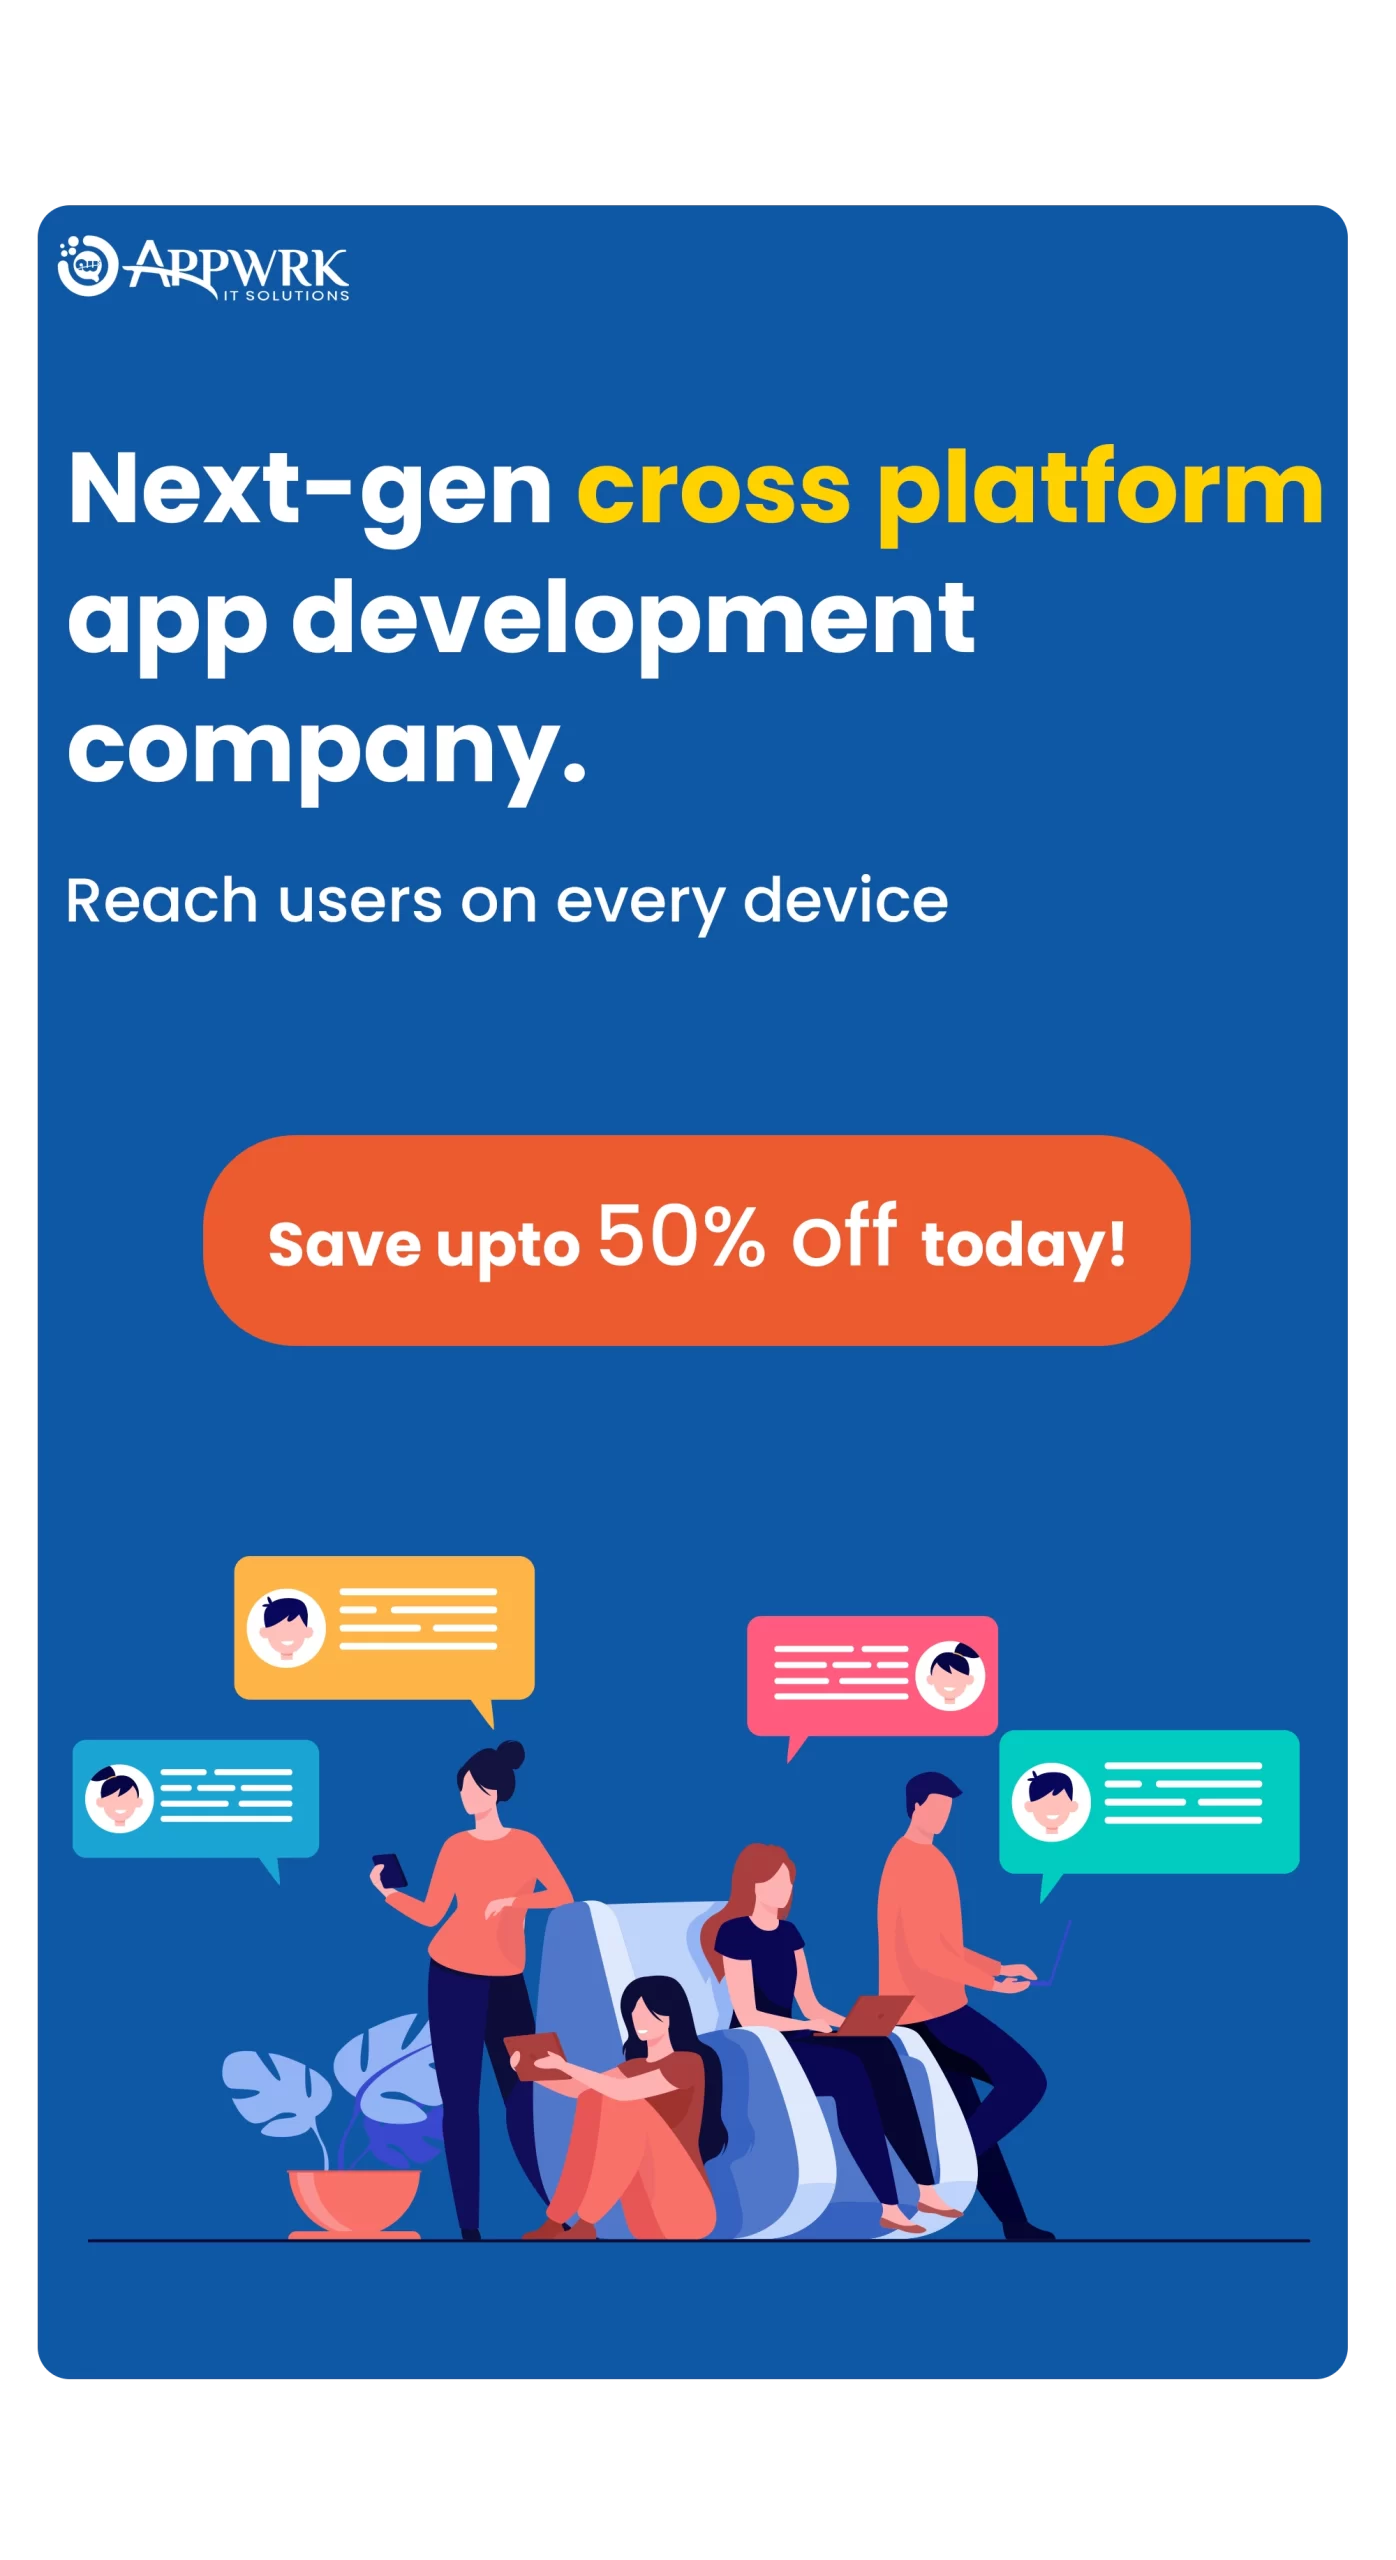 Next-gen cross platform app development company